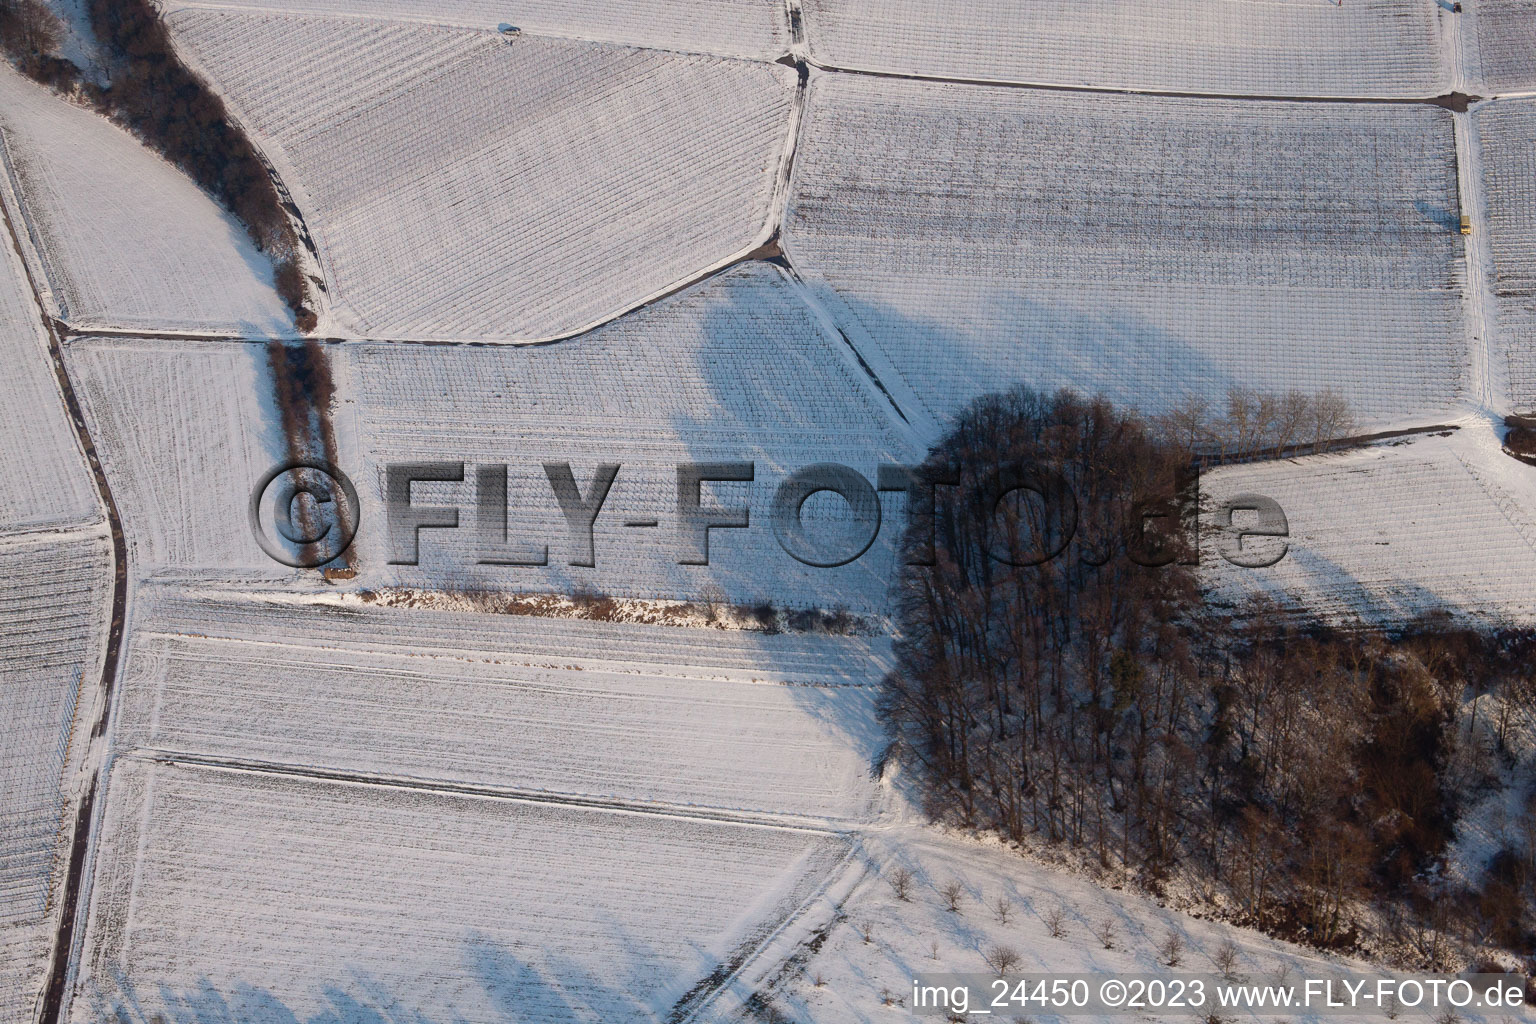 Aerial photograpy of In winter in the district Klingen in Heuchelheim-Klingen in the state Rhineland-Palatinate, Germany